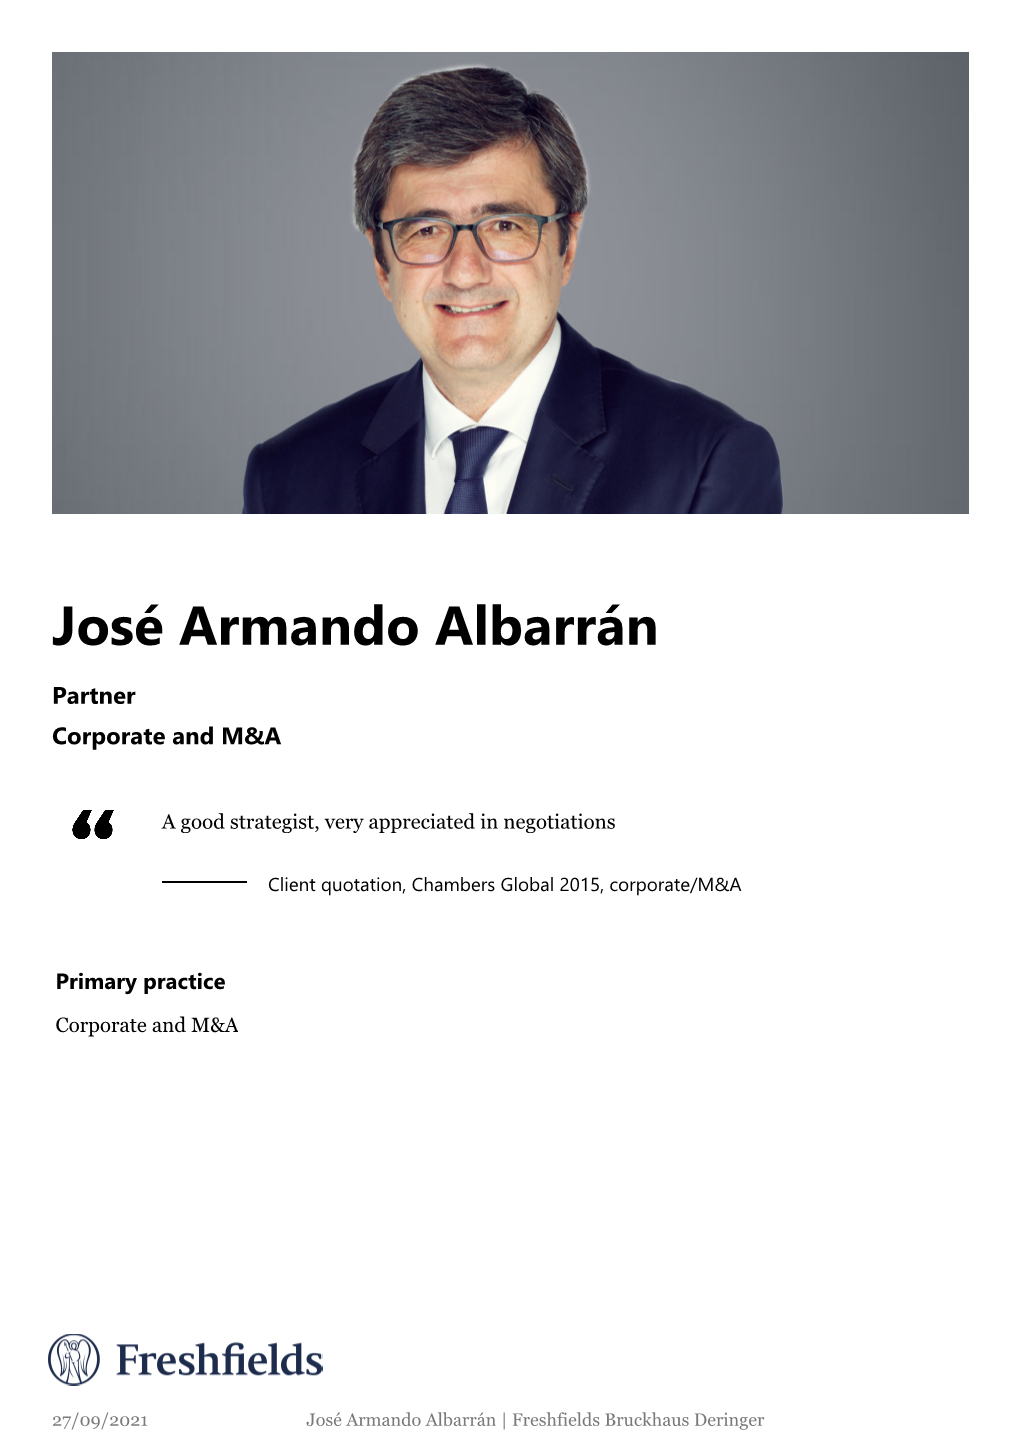 José Armando Albarrán